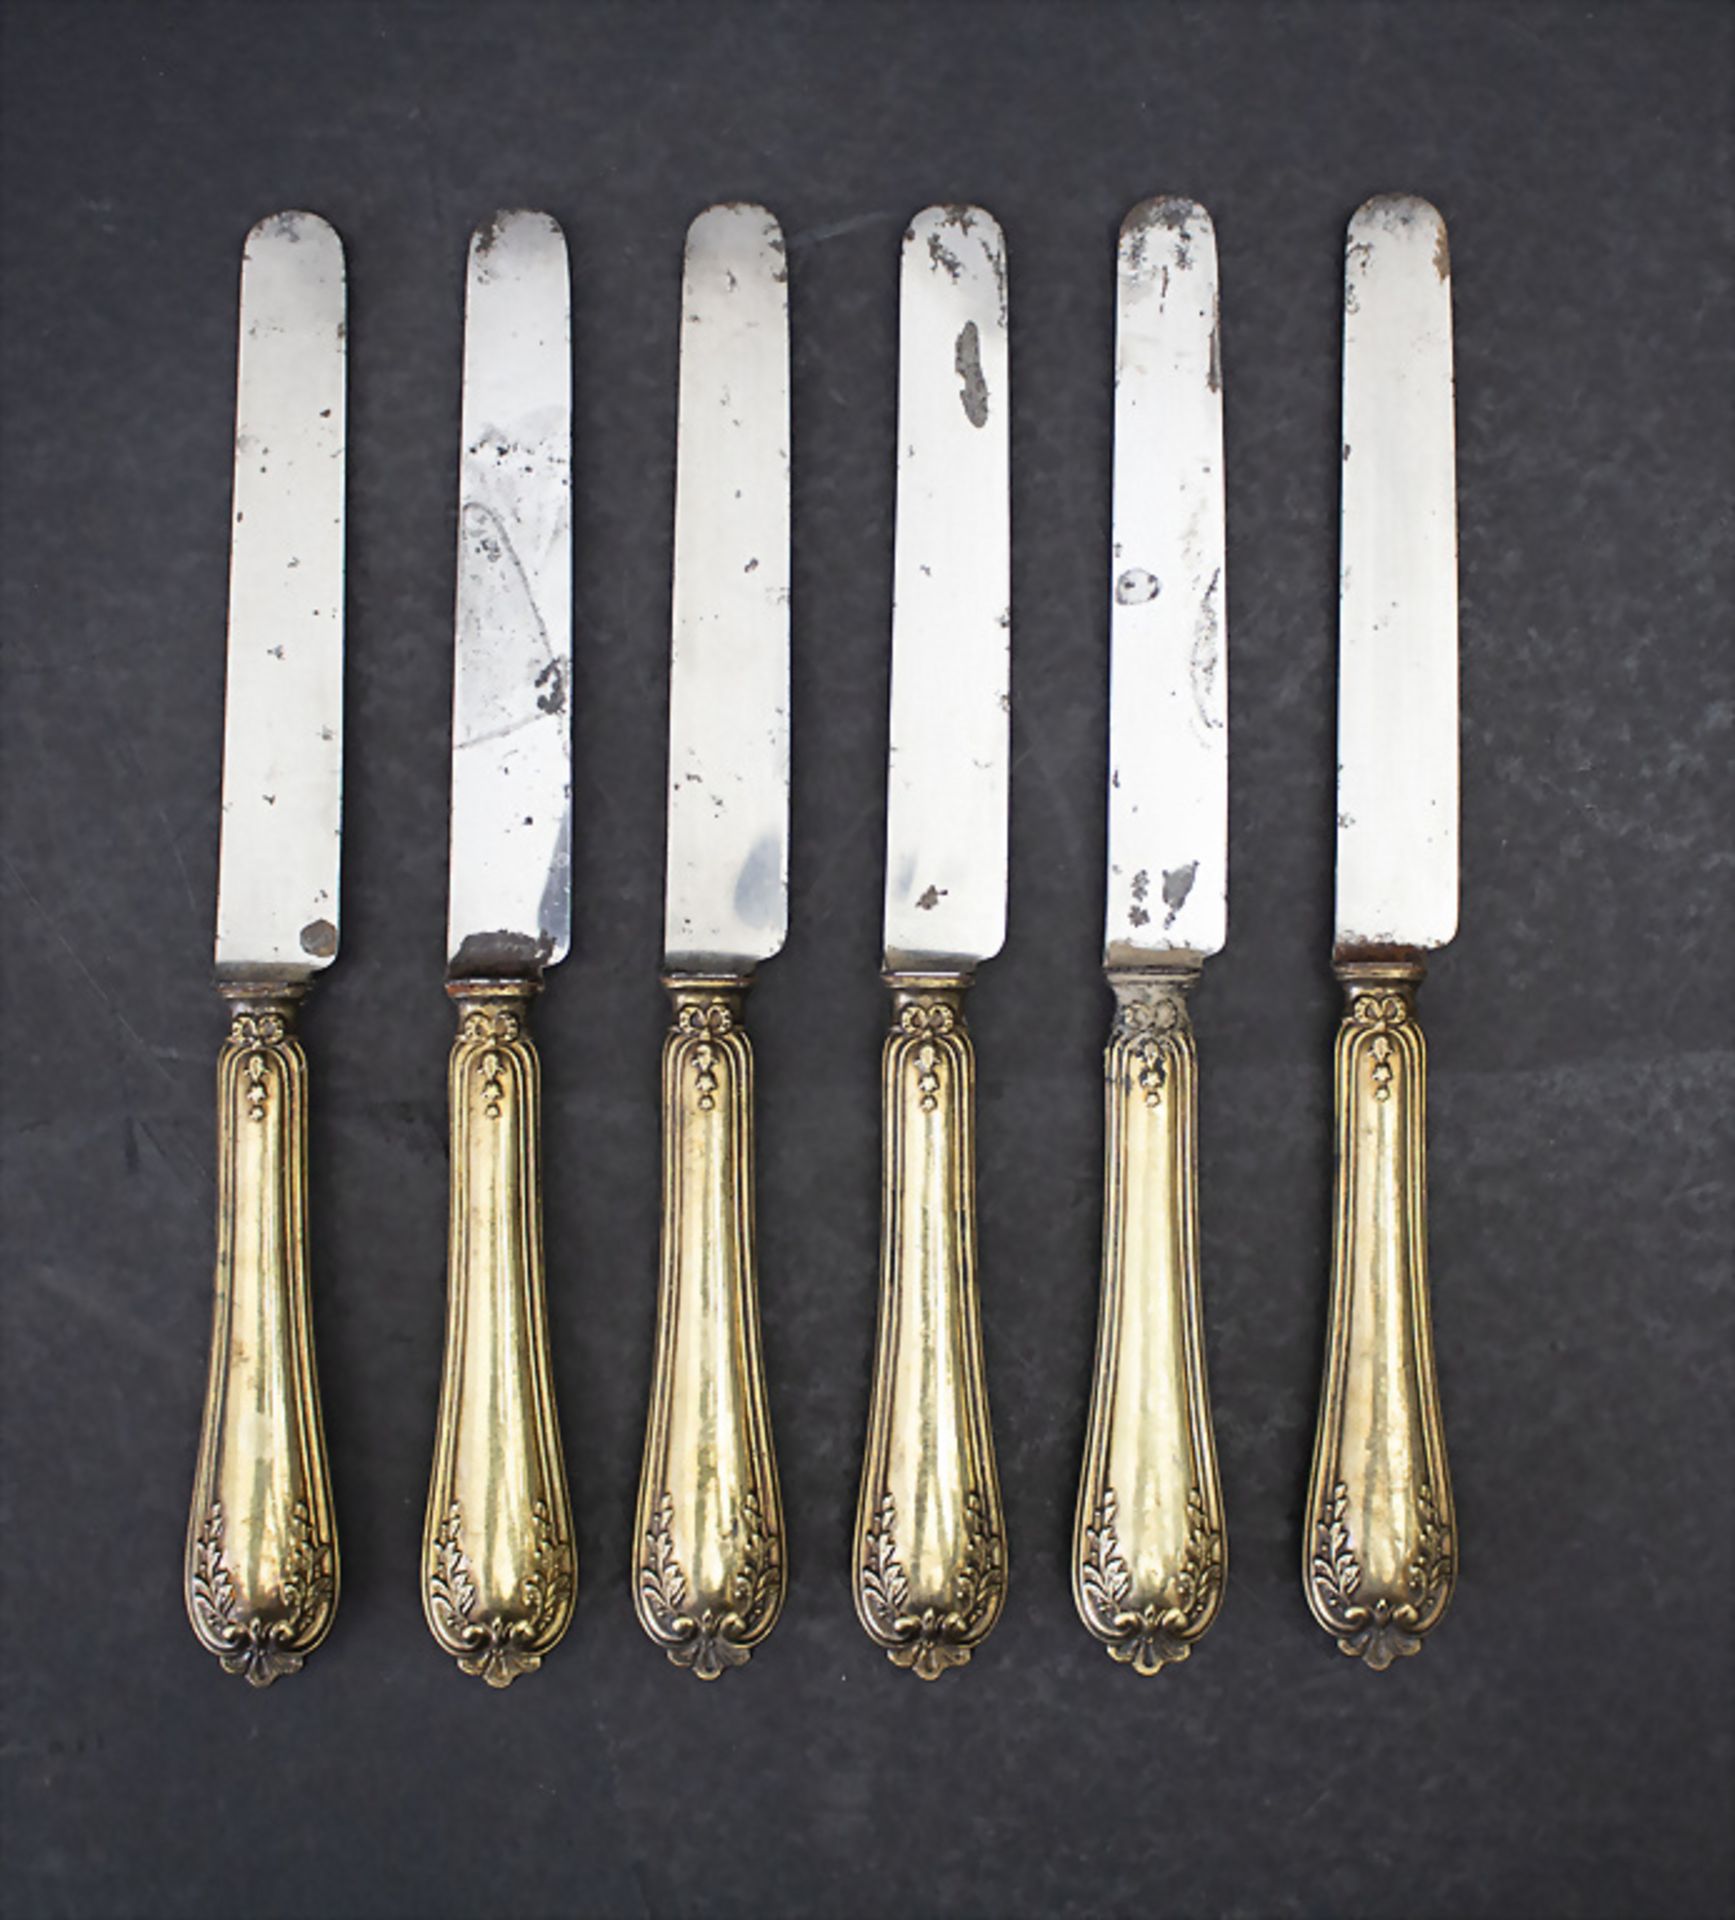 6 Messer / A set of 6 silver knives, Hippolyte Thomas, Paris, 1845-55 - Image 2 of 2